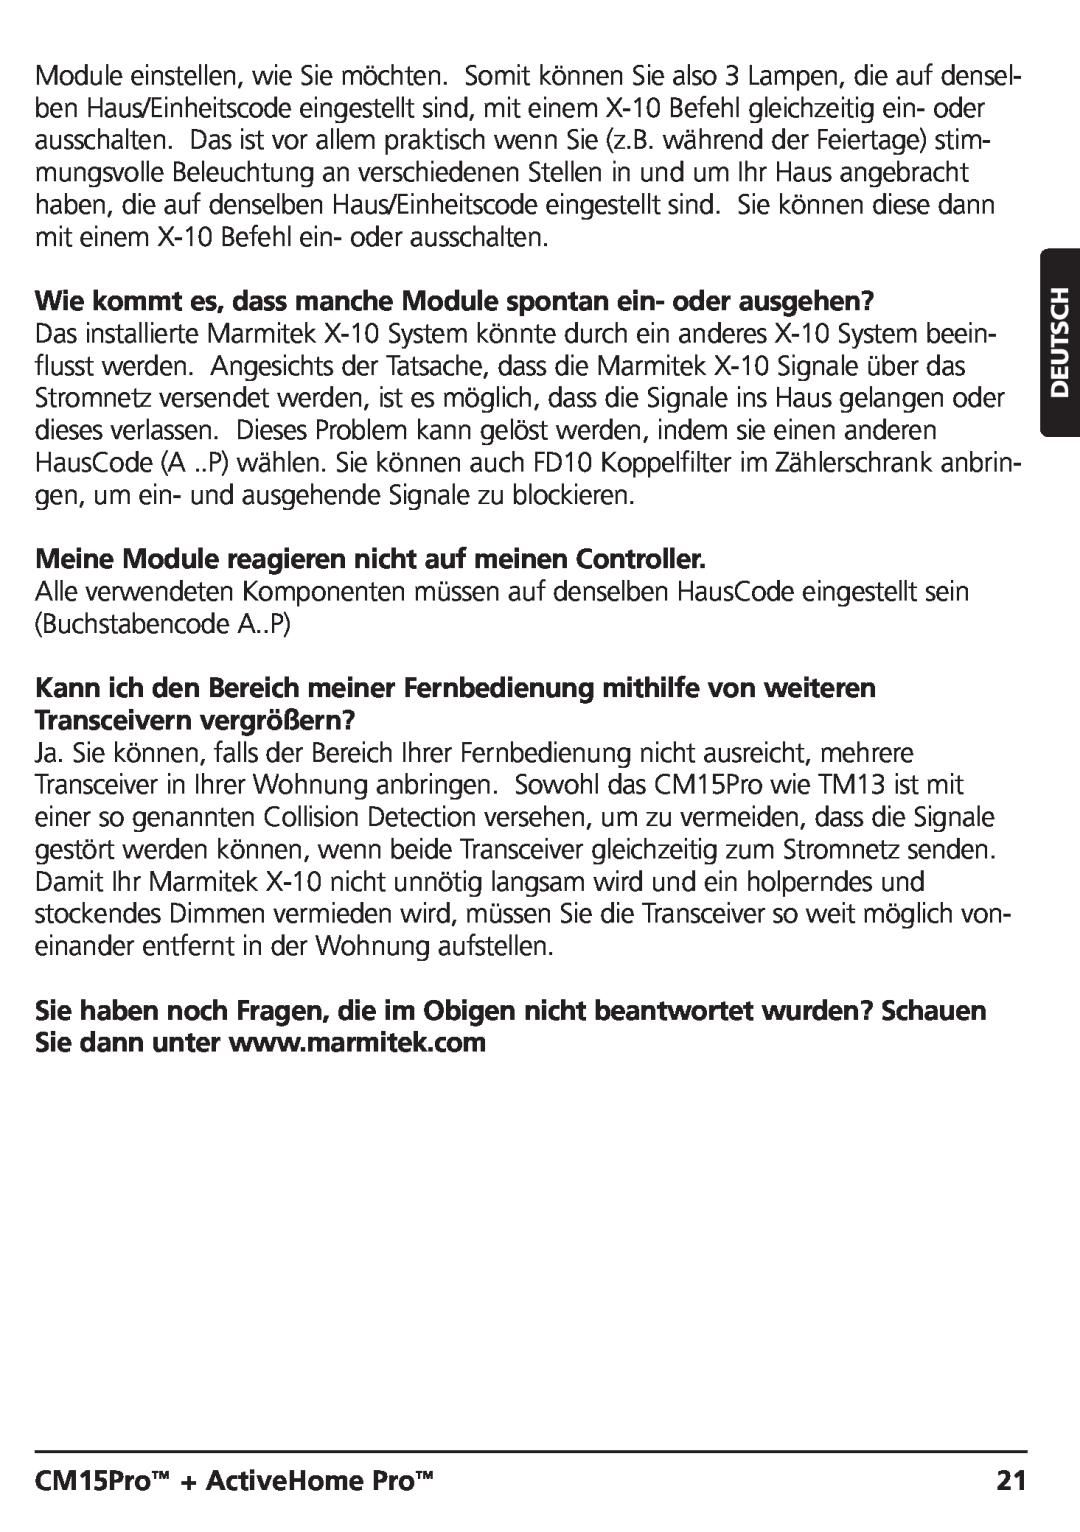 Marmitek CM15PRO manual CM15Pro + ActiveHome Pro, Deutsch 